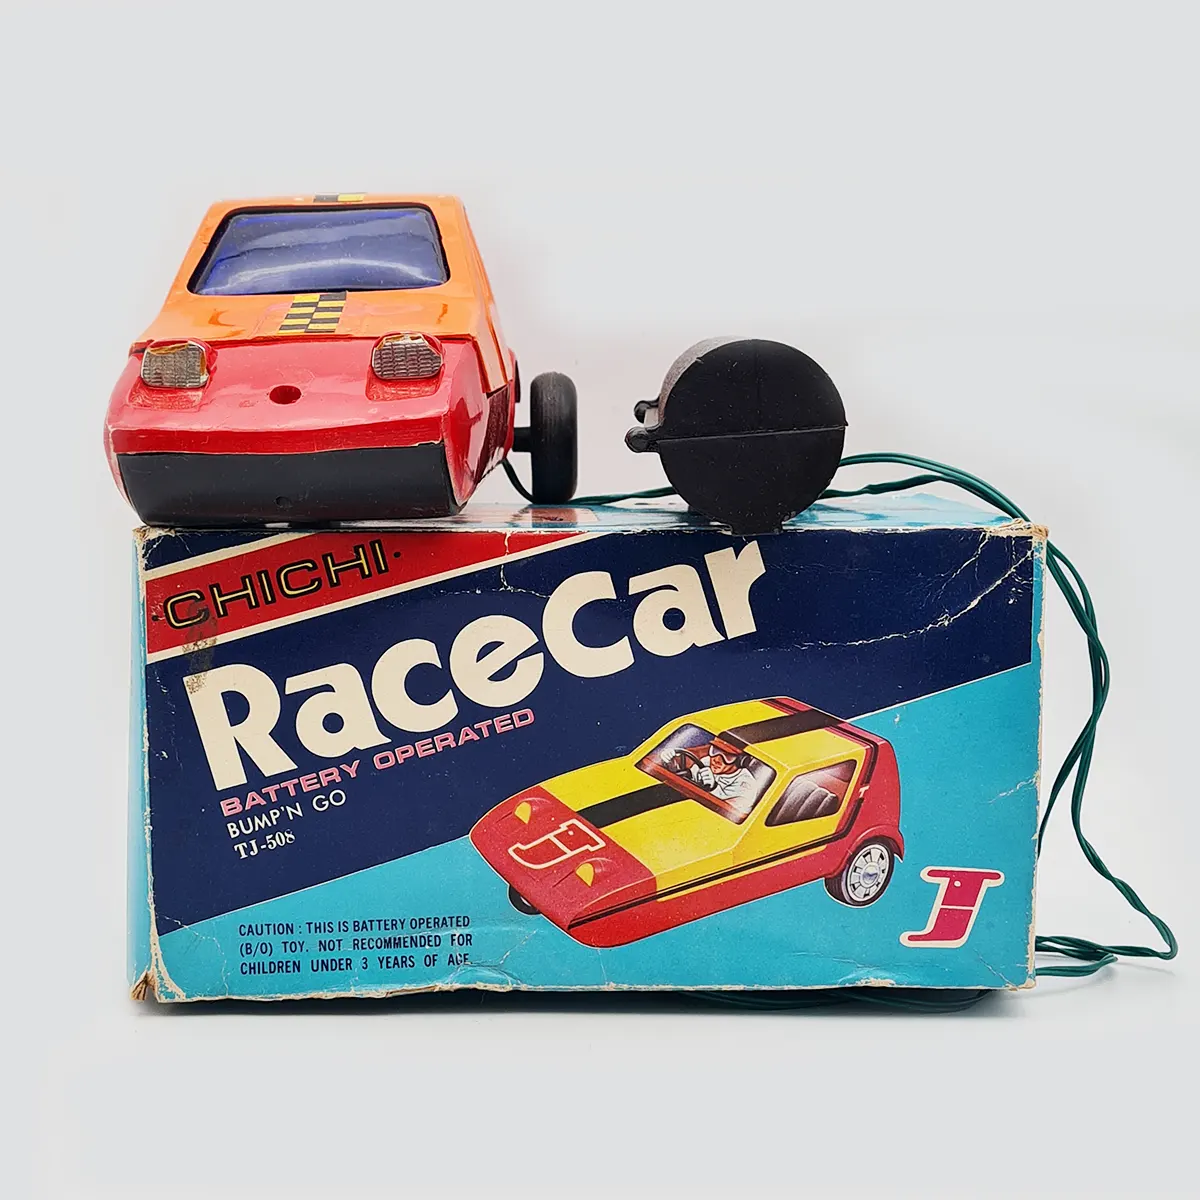 Chichi Race Car